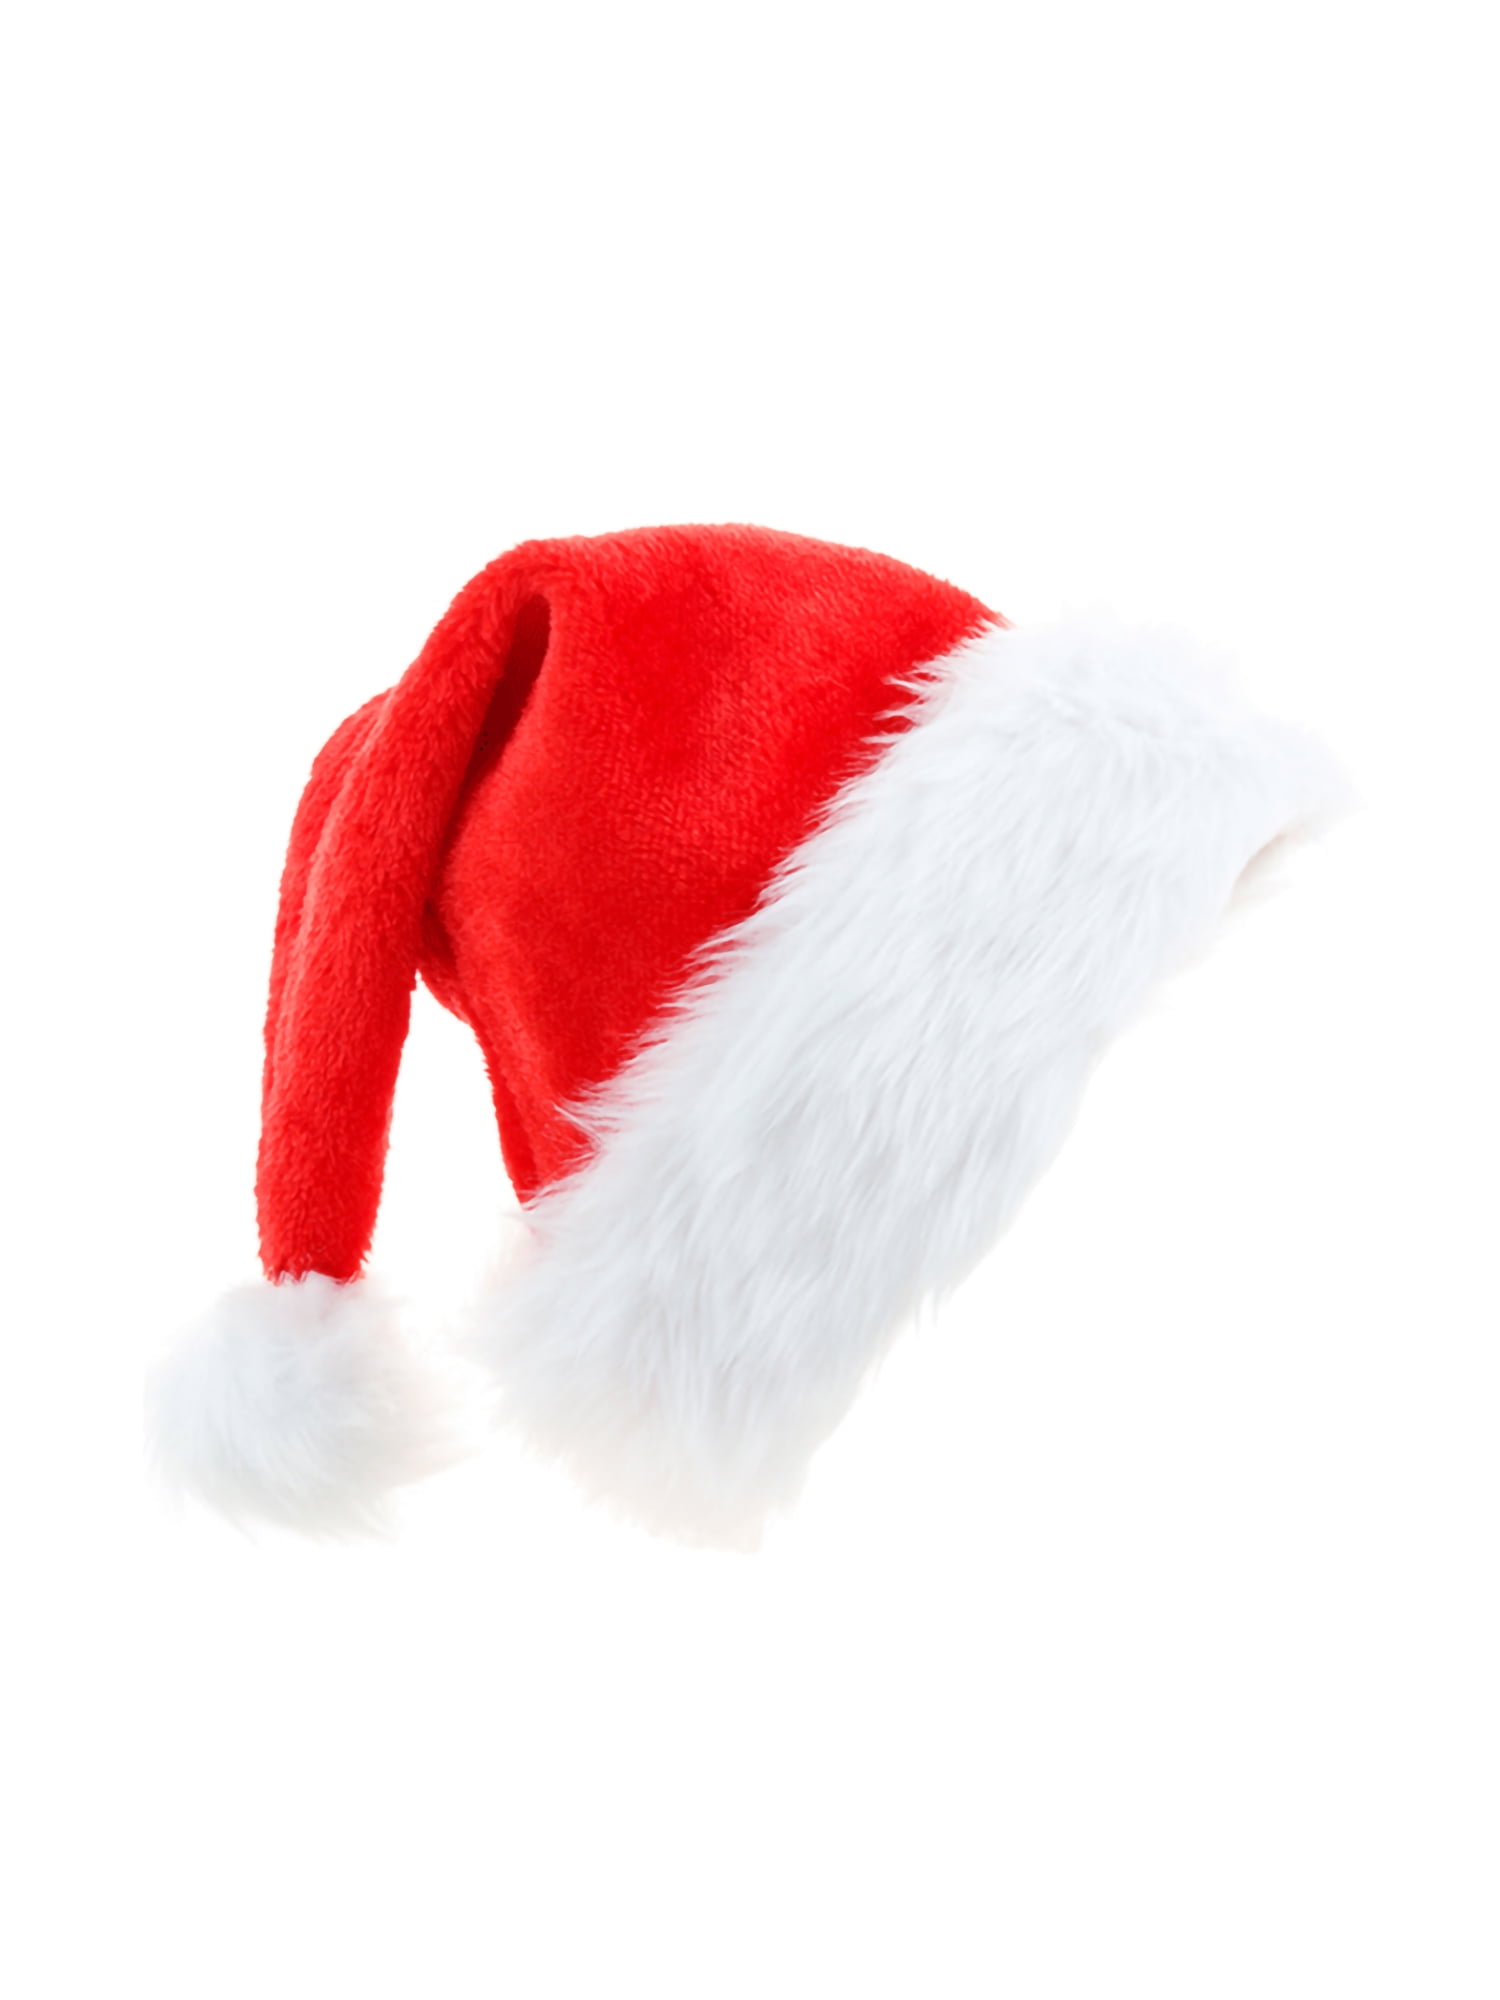 Christmas Party Santa Claus Dress Red Plush Hat Cap Xmas Headgear Costume Gift # 